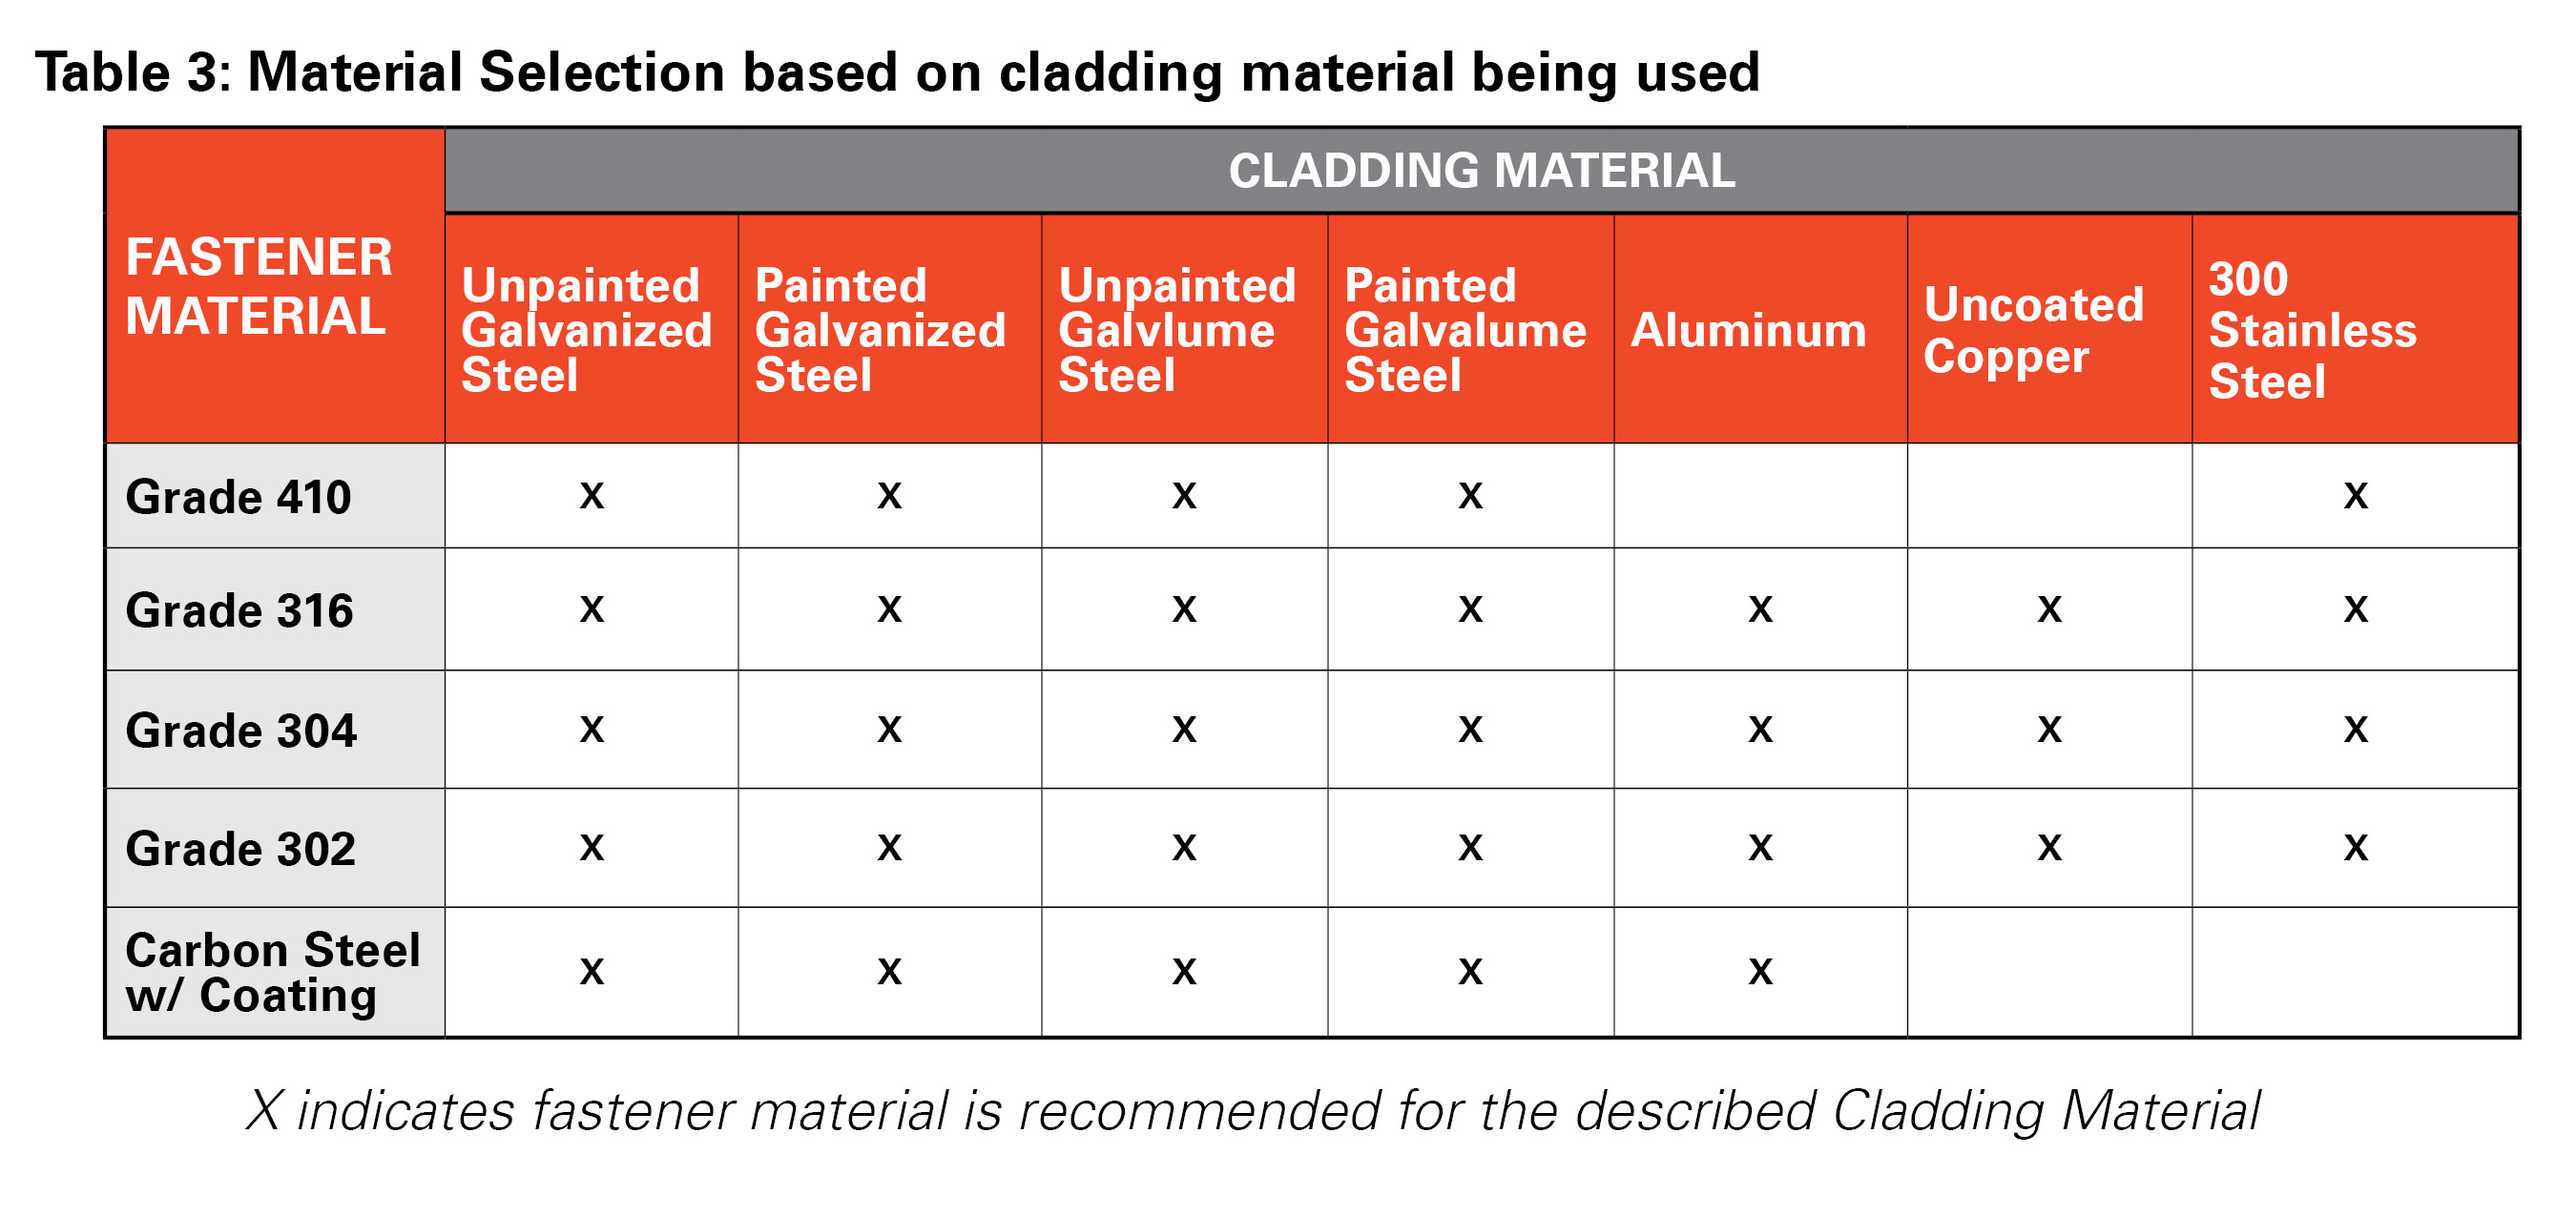 304 vs 316 Stainless Steel